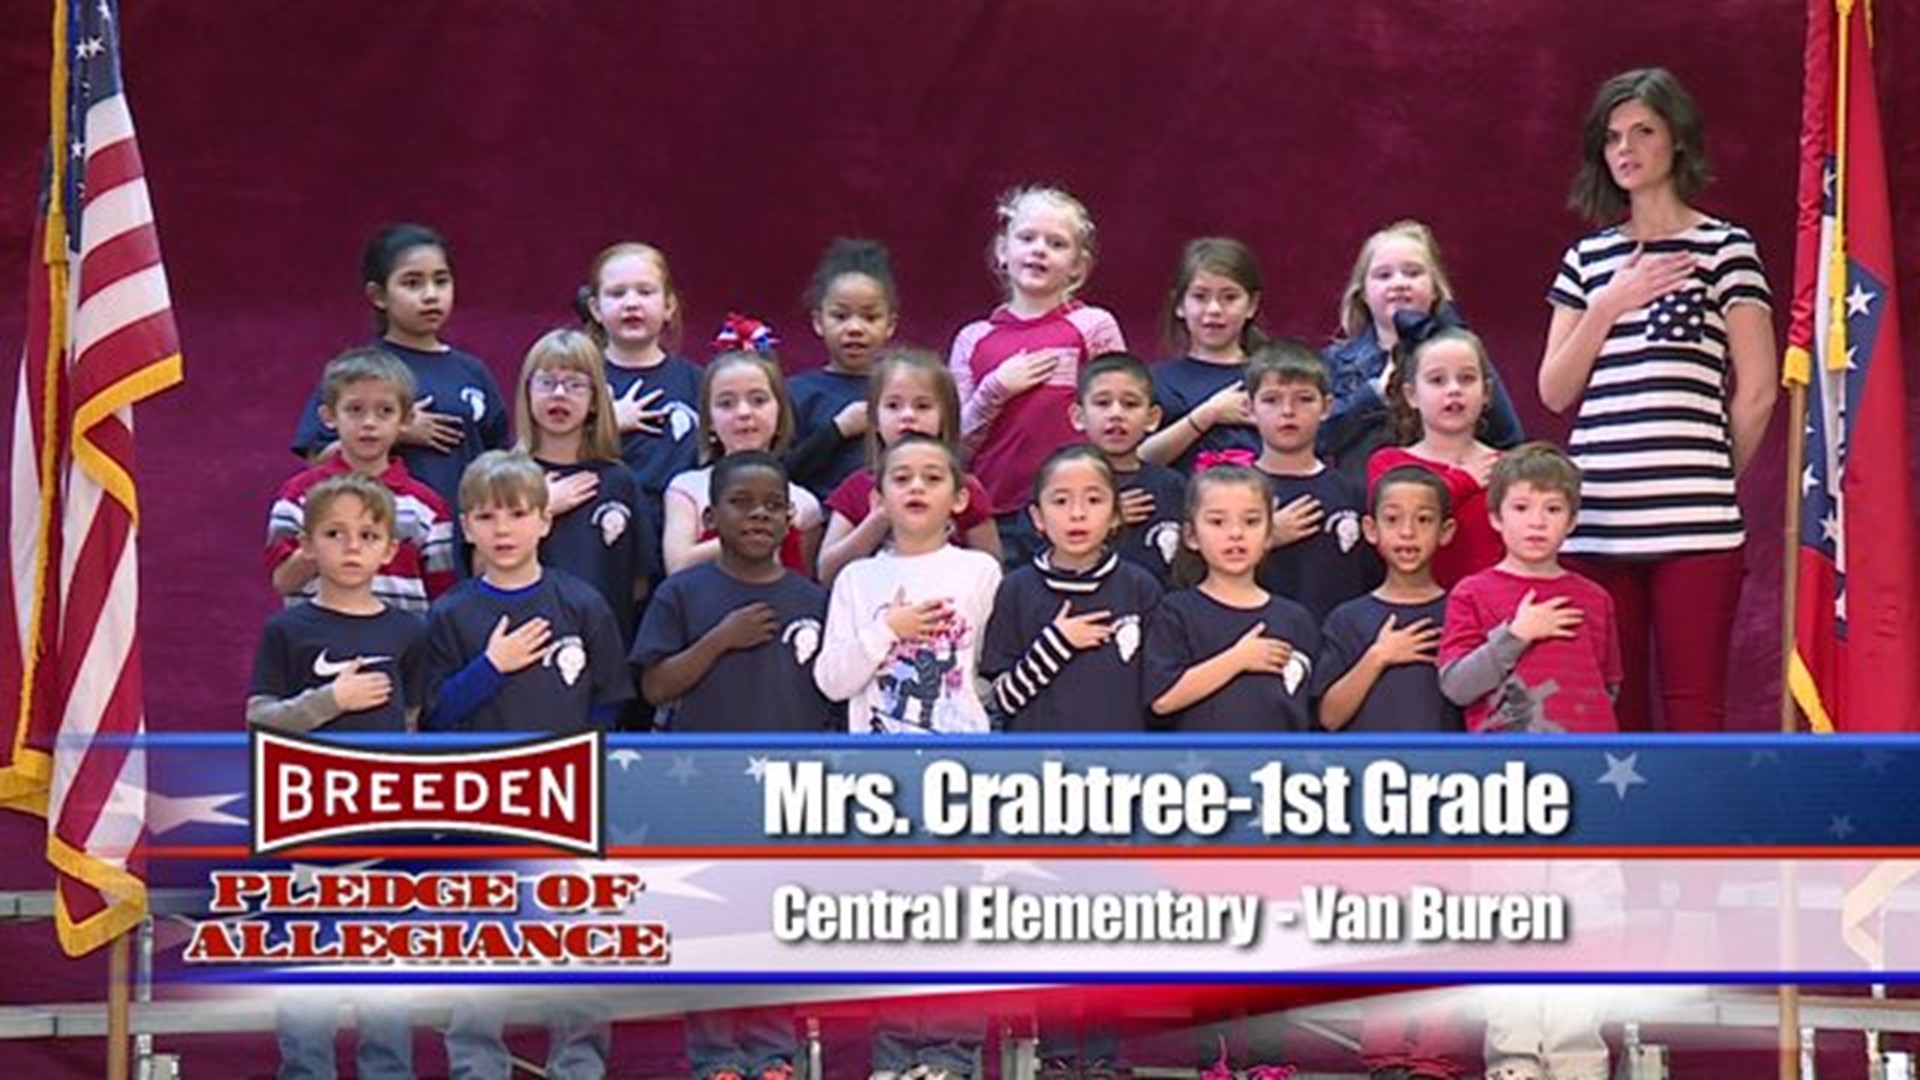 Central Elementary - Van Buren, Mrs. Crabtree - First Grade